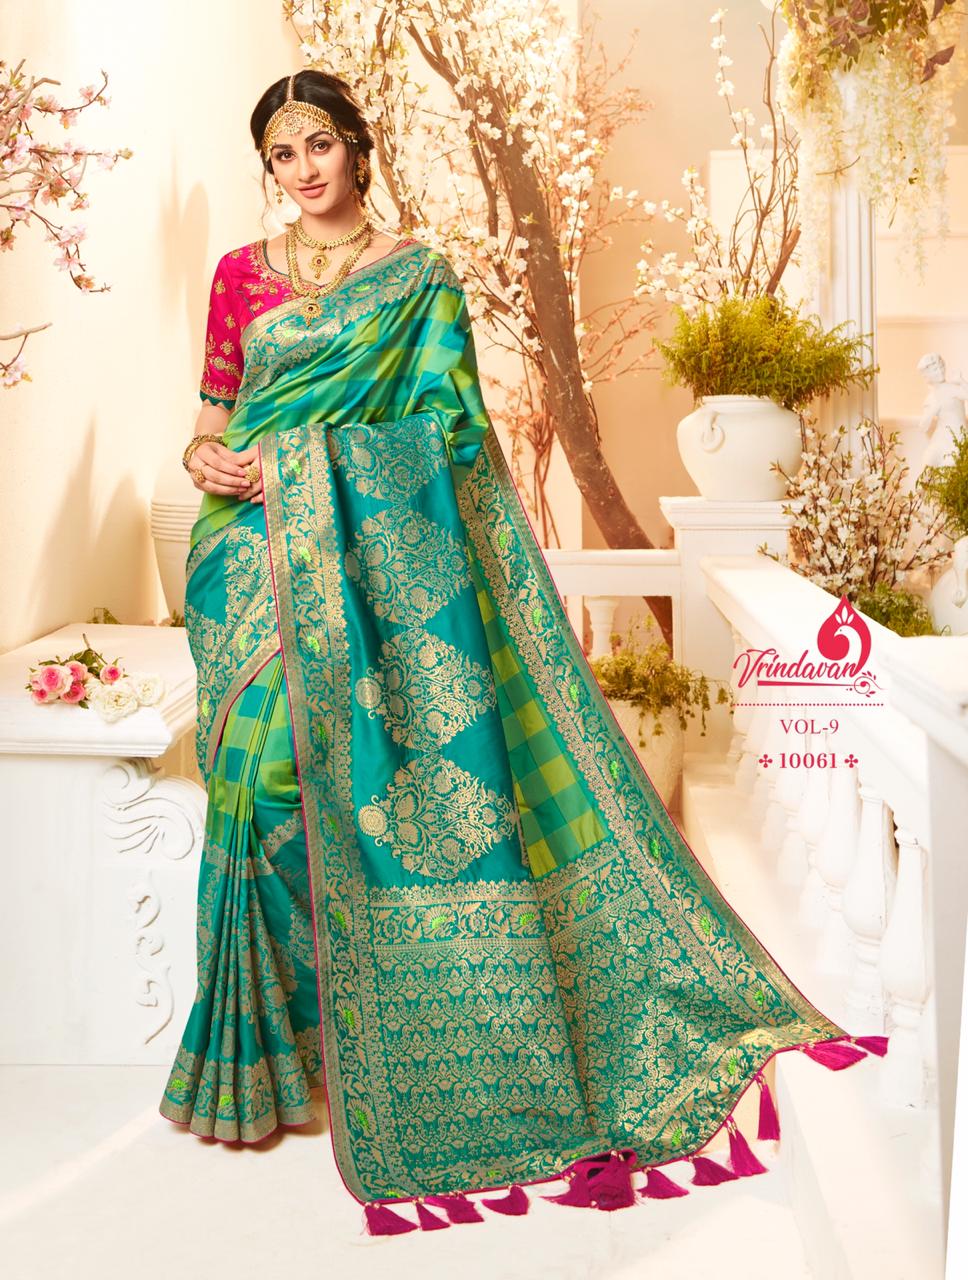 Royal Presents Vrindavan Vol-9 Bridal Designer Wedding Season Special Banarasi Silk Sarees Catalogue Wholesaler